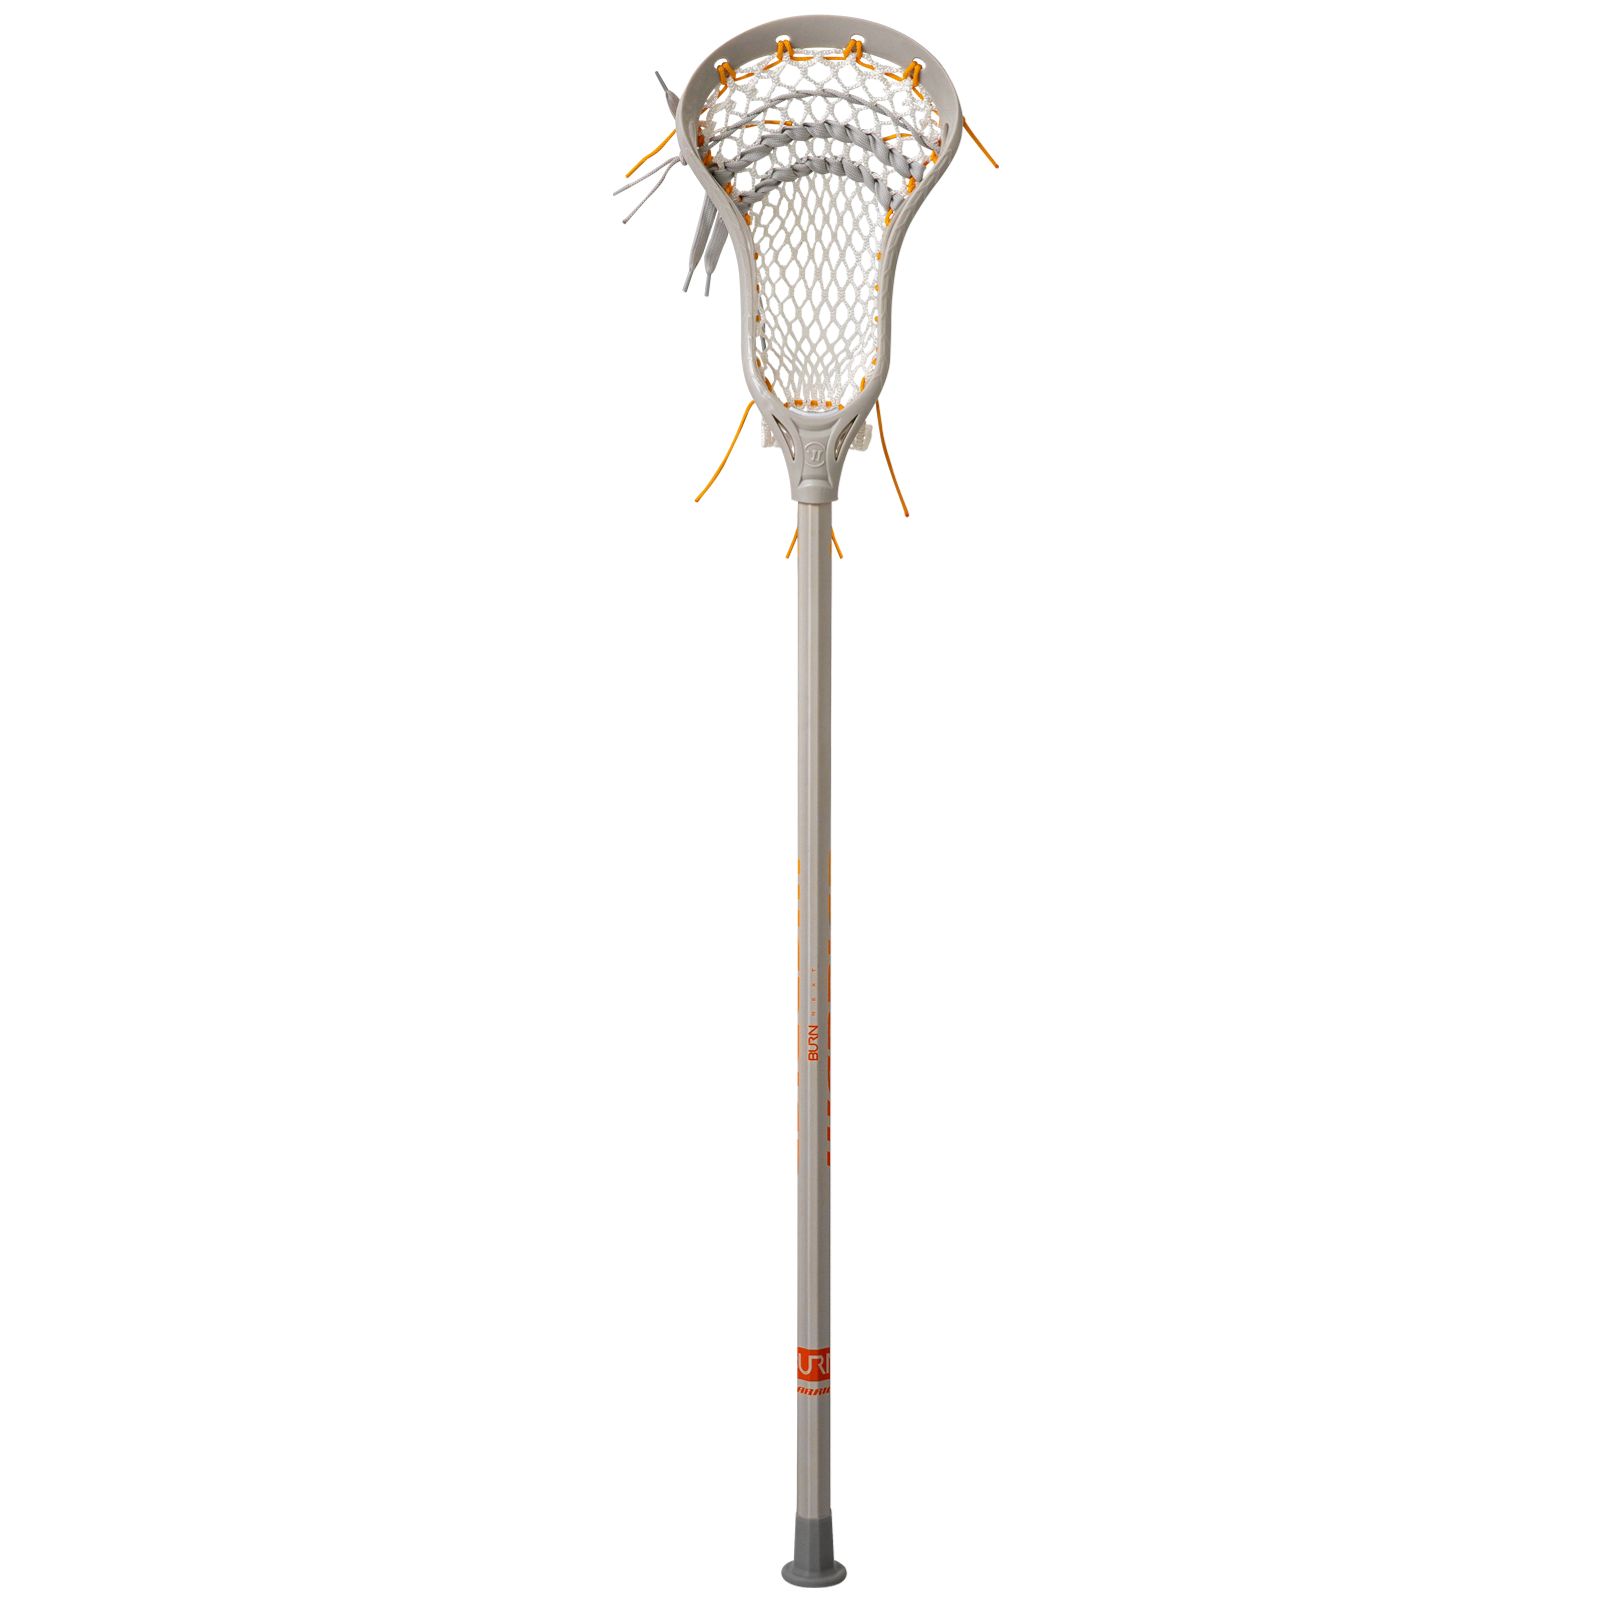 Pin on Custom Lacrosse shafts